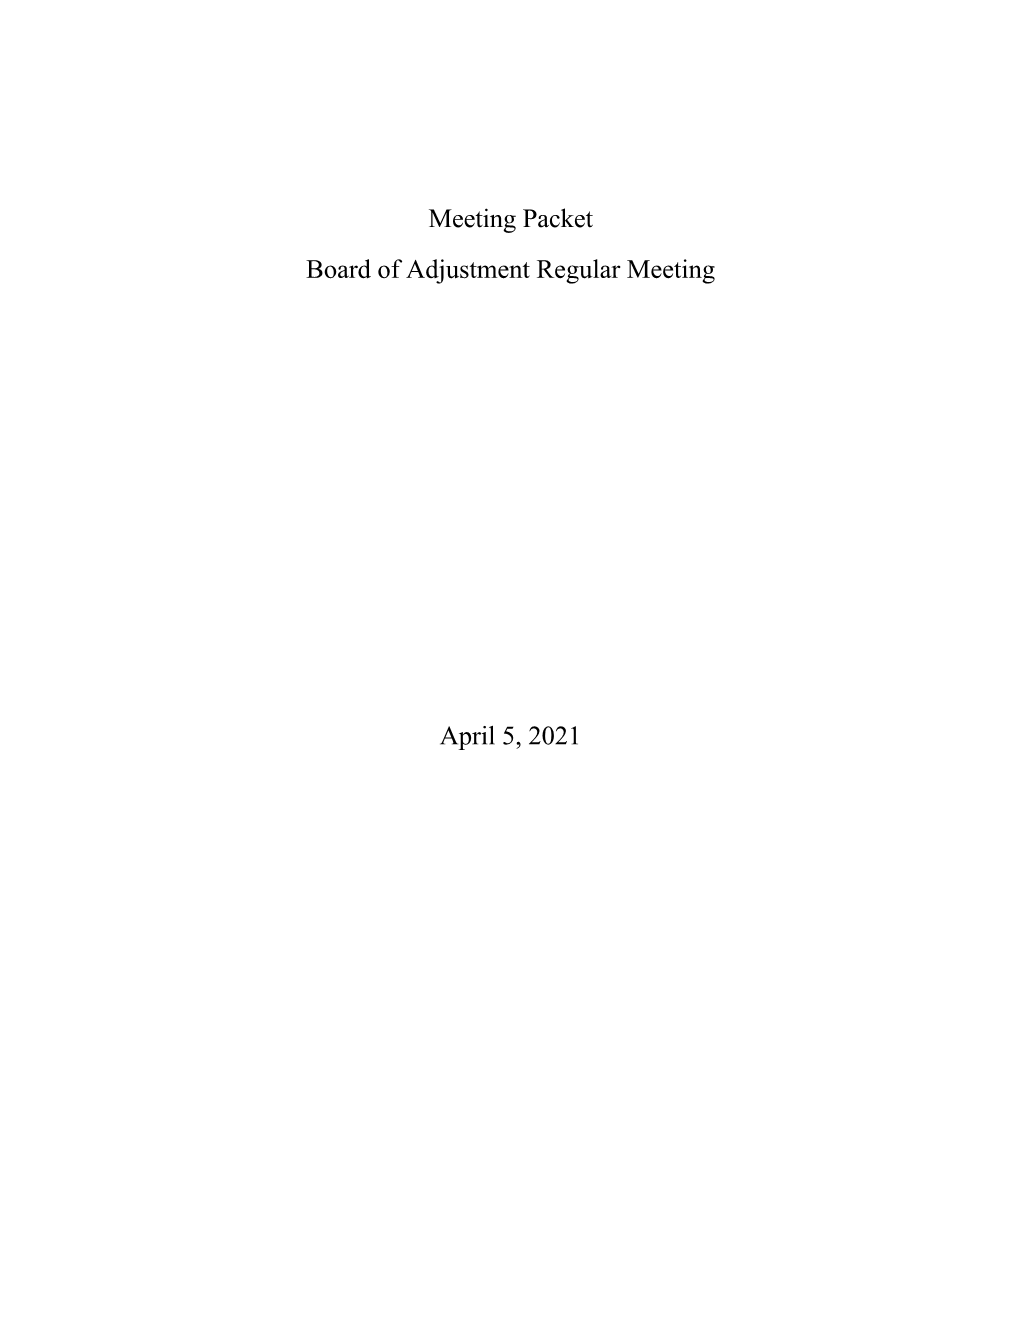 Meeting Packet Board of Adjustment Regular Meeting April 5, 2021